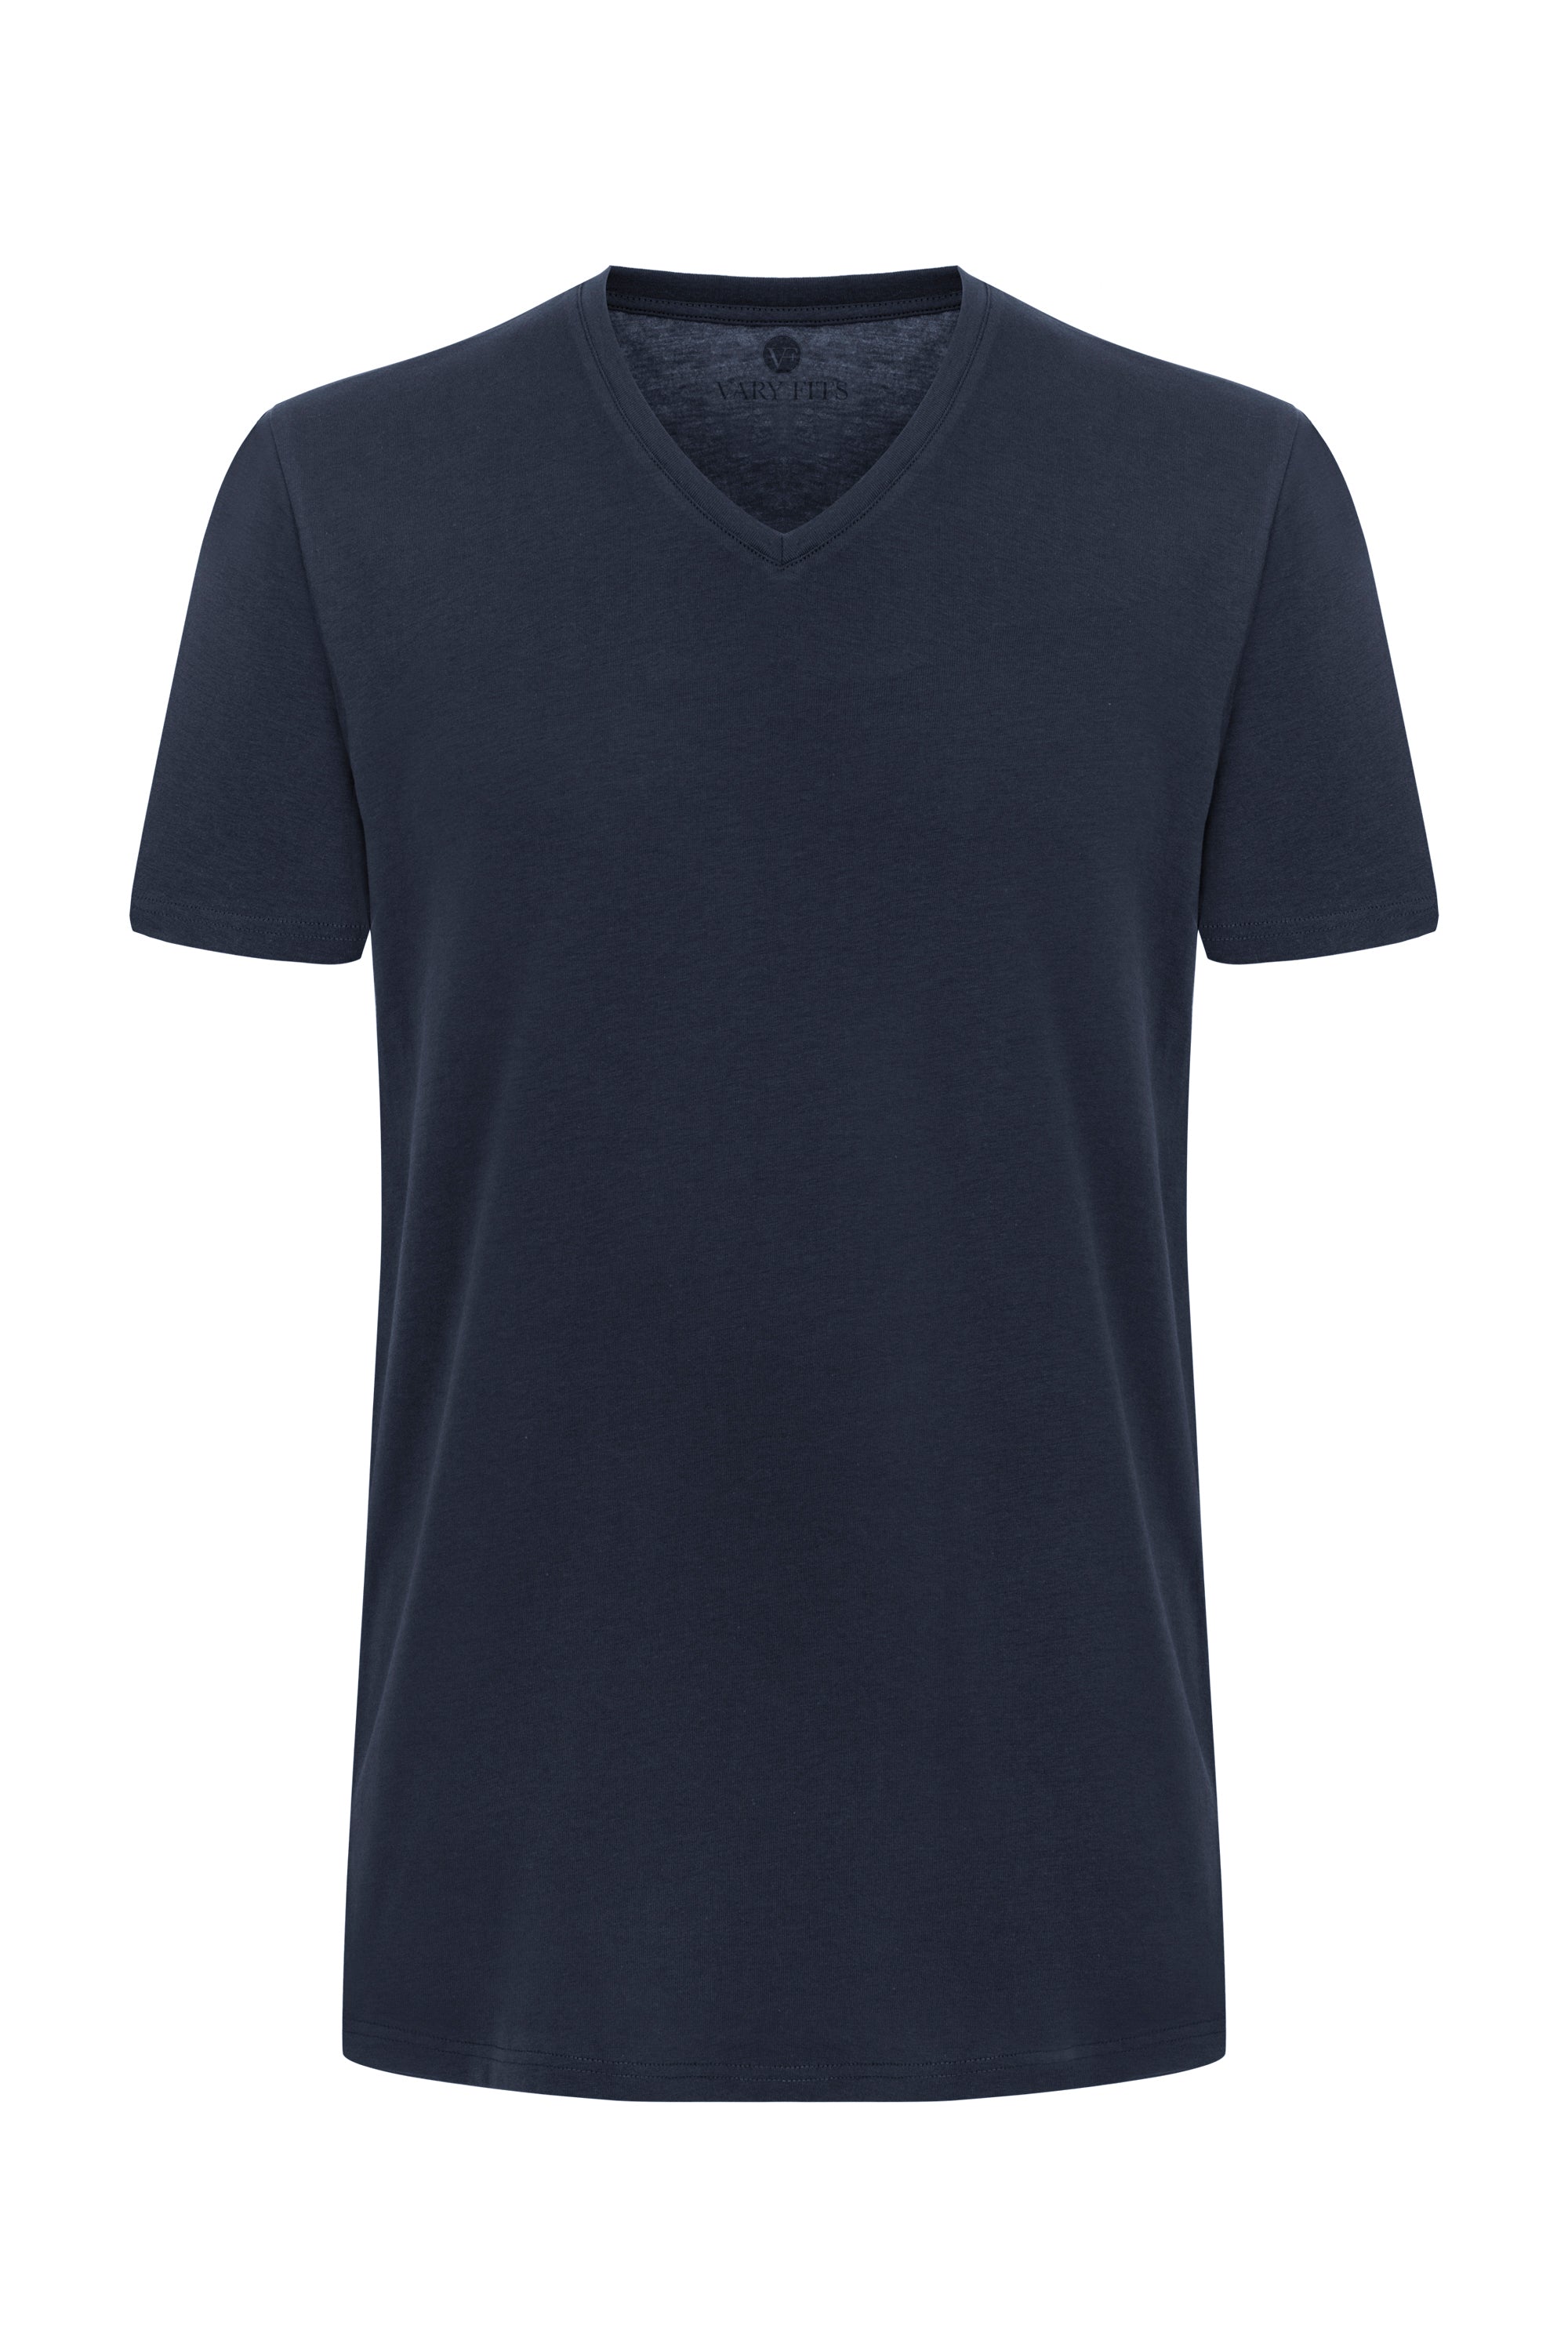 Ajax Navy T-Shirt For Man | Vary Fits